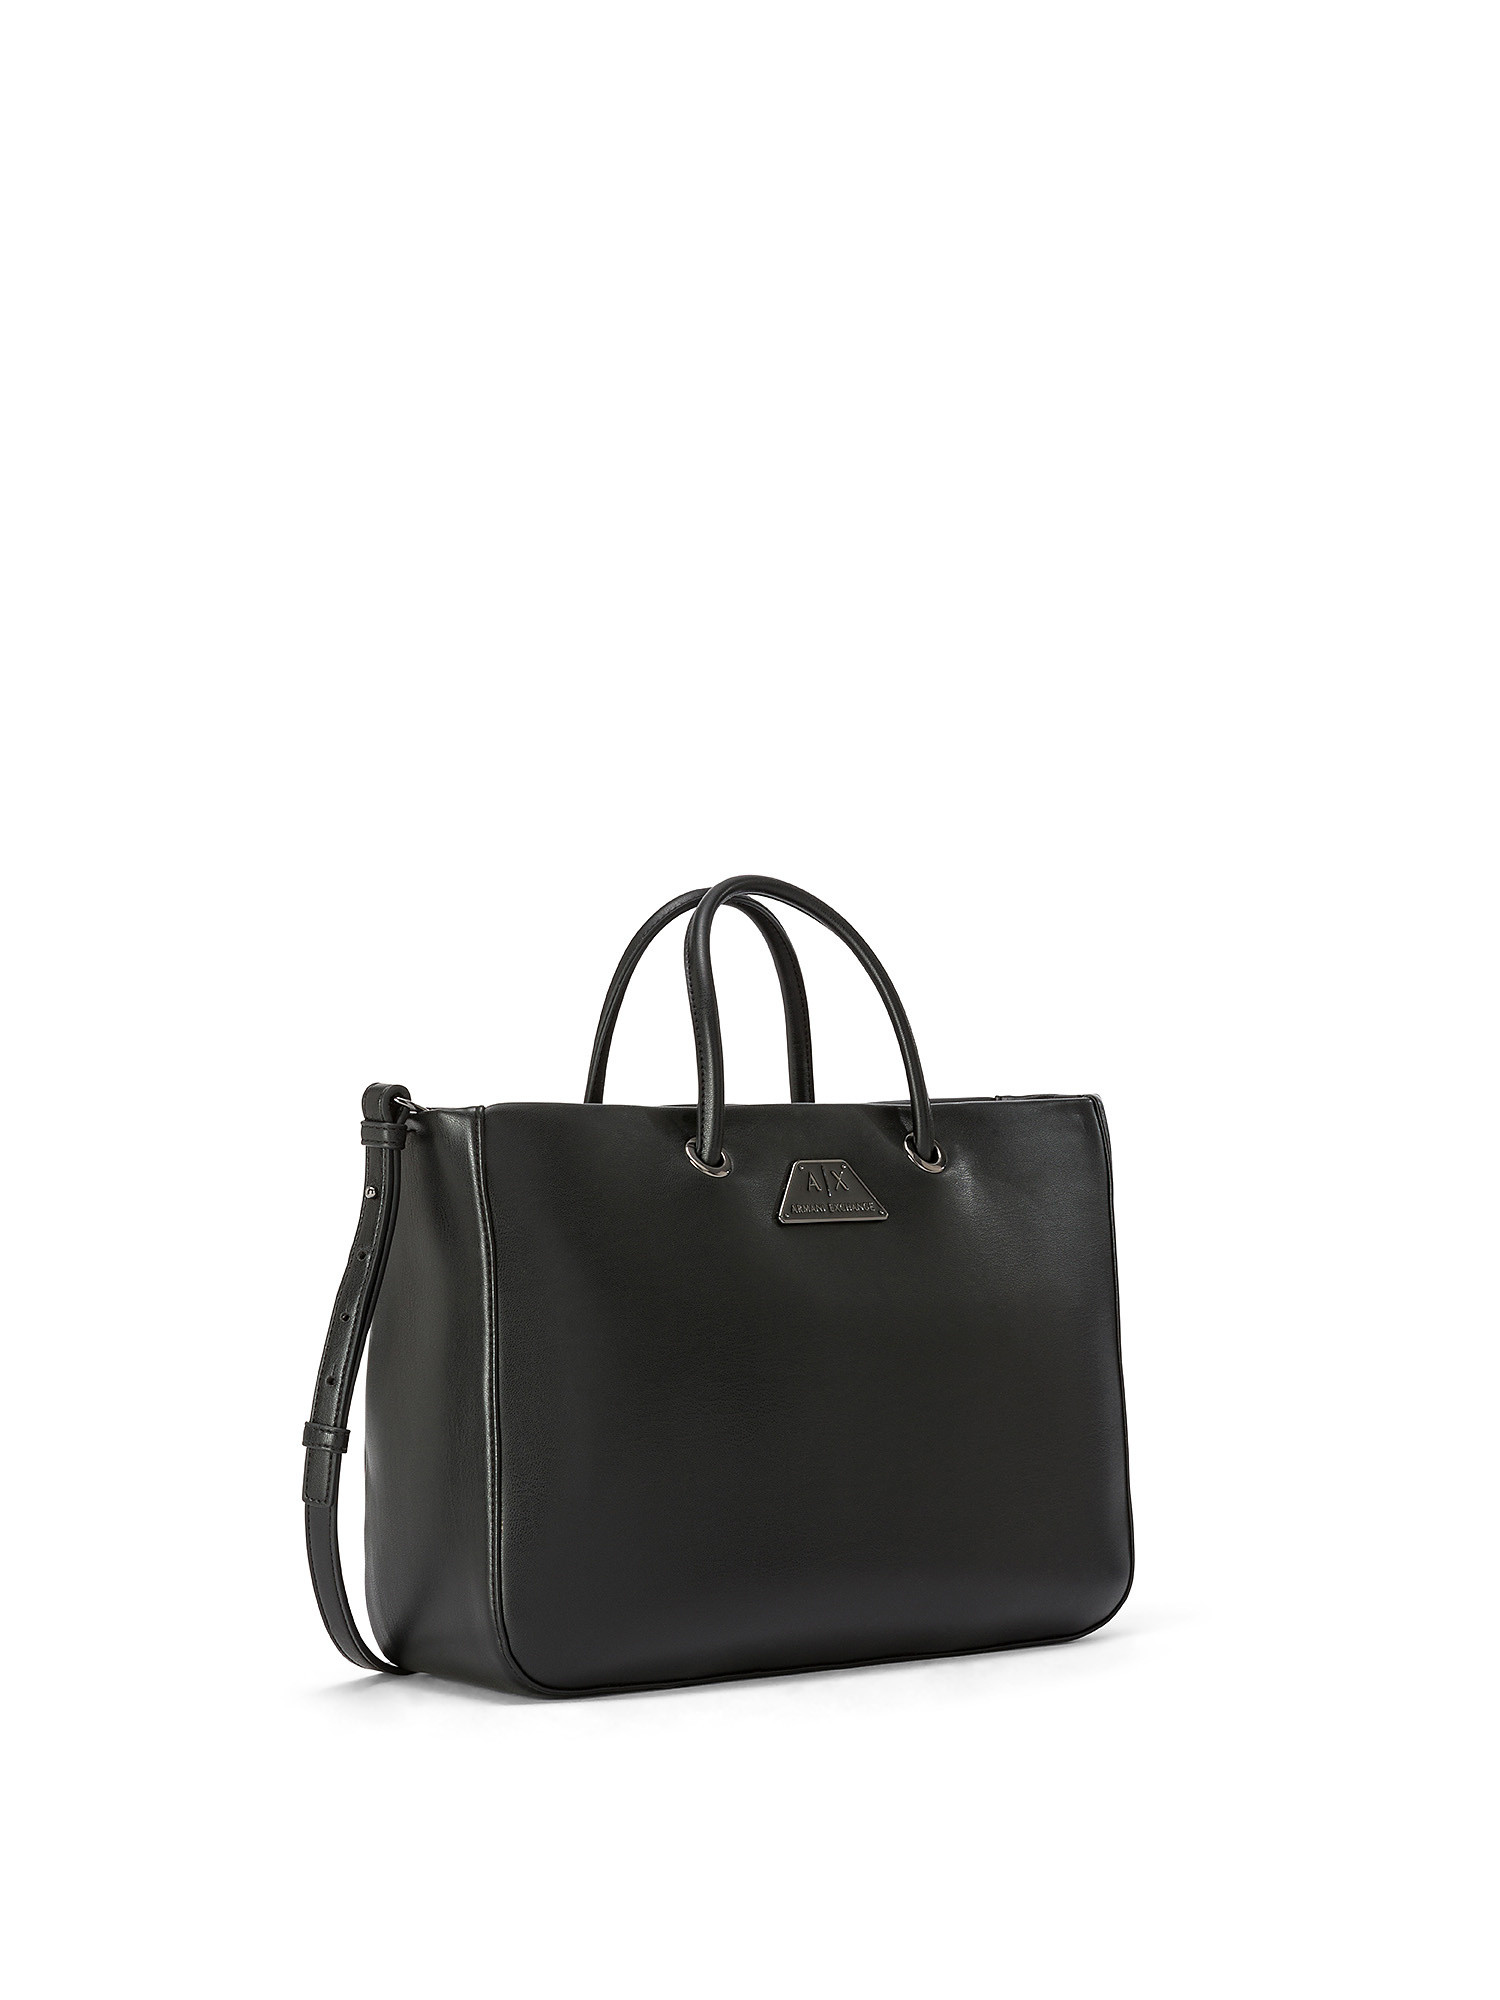 Armani Exchange - Handbag with logo, Black, large image number 1